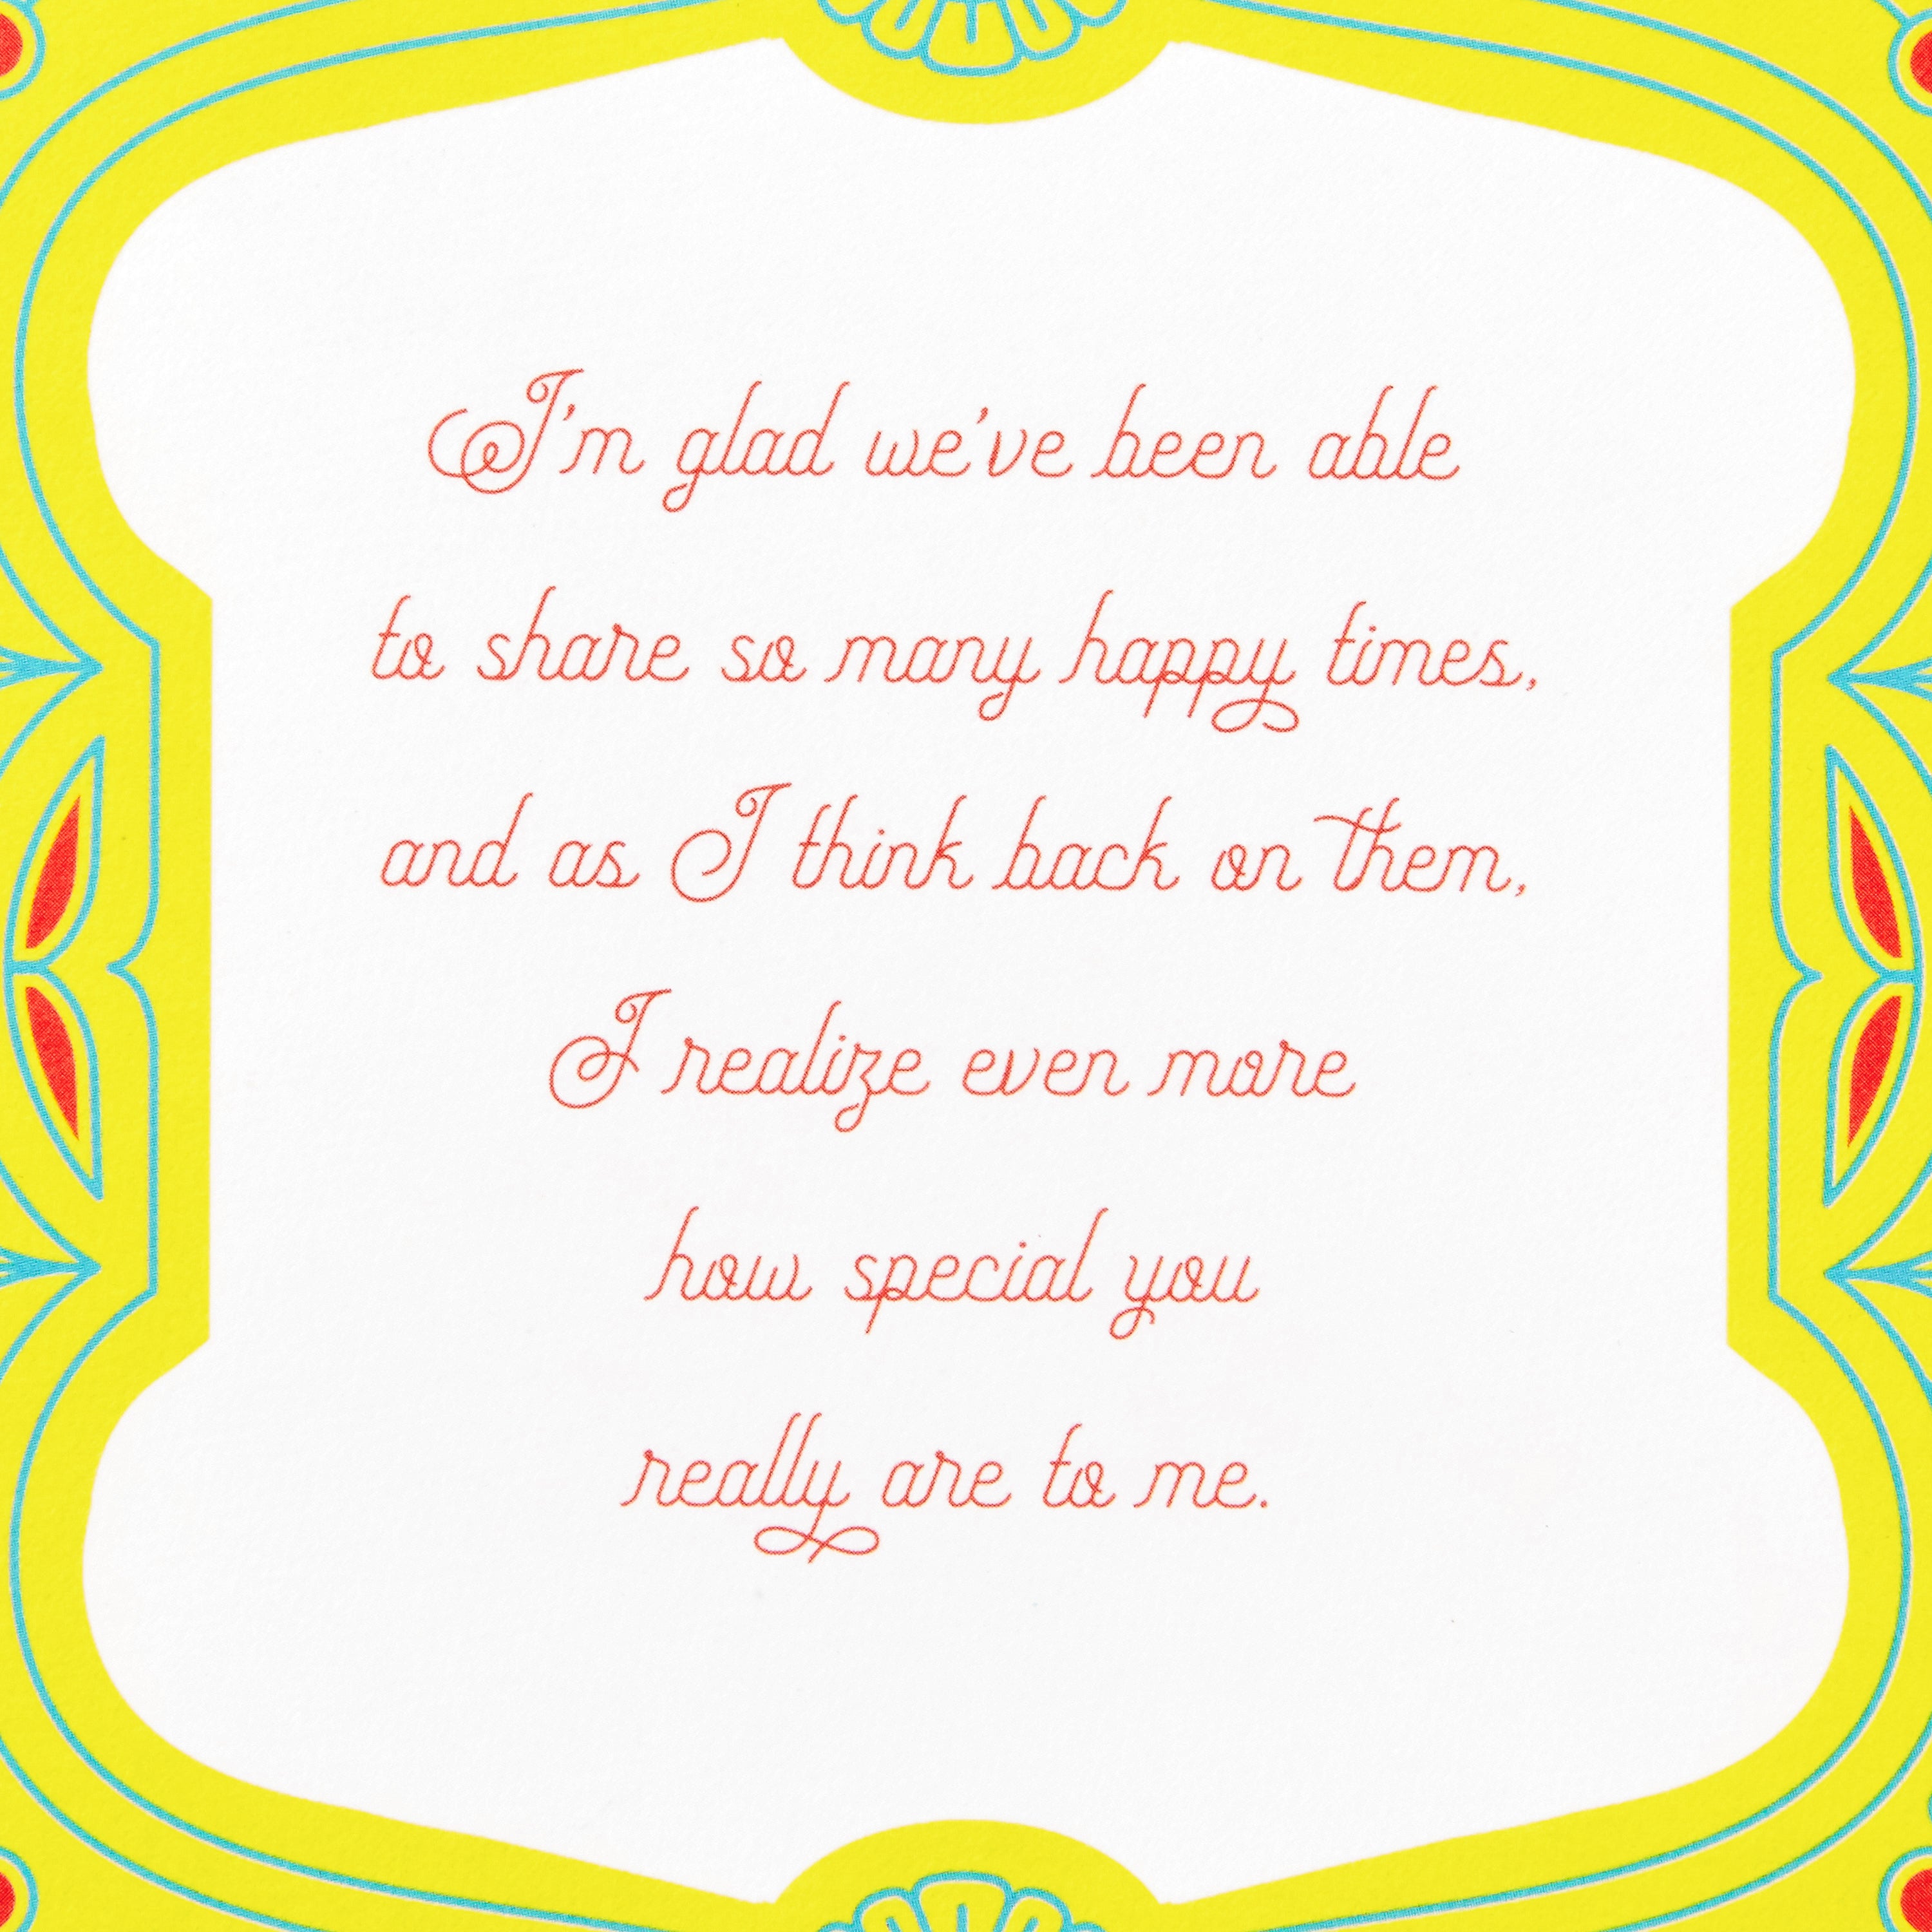 Golden Thread Birthday Card for Friend (Celebrating You)